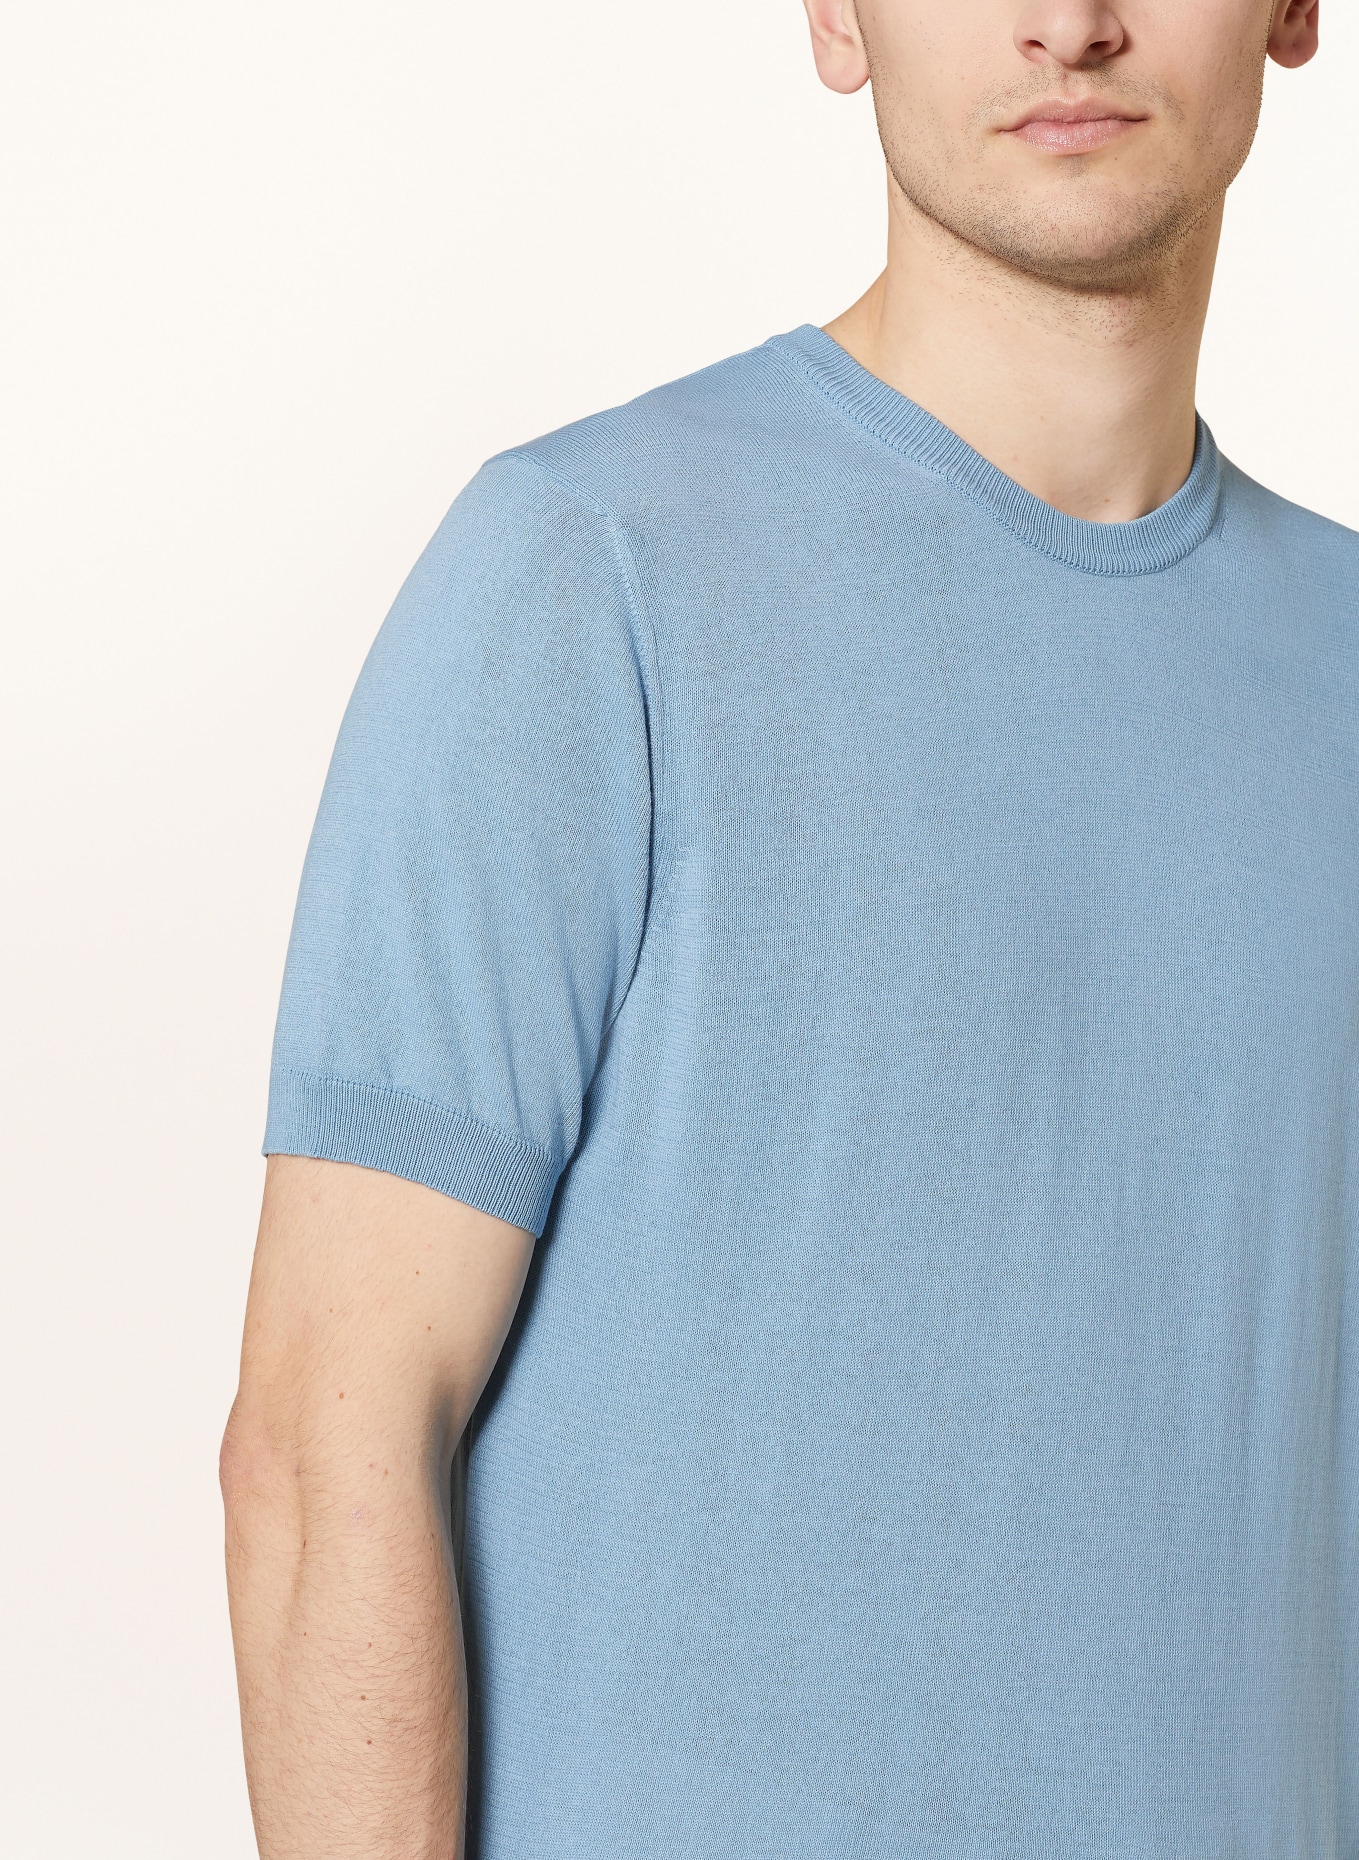 EDUARD DRESSLER Strickshirt, Farbe: BLAUGRAU (Bild 4)